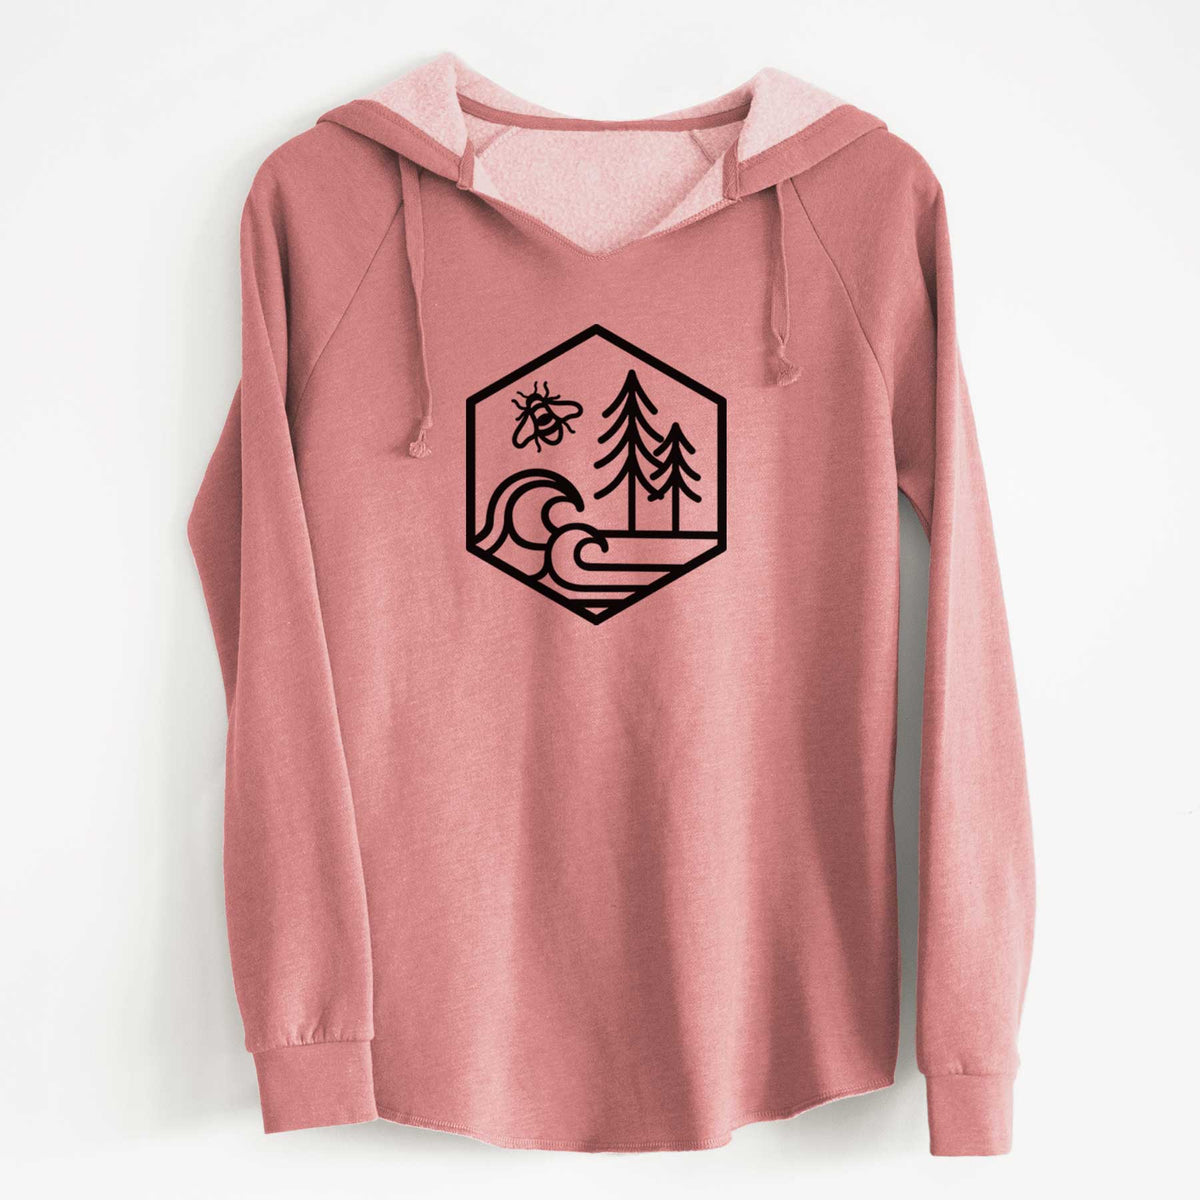 Harmonious Hexagon - Bees, Seas, Trees - Cali Wave Hooded Sweatshirt